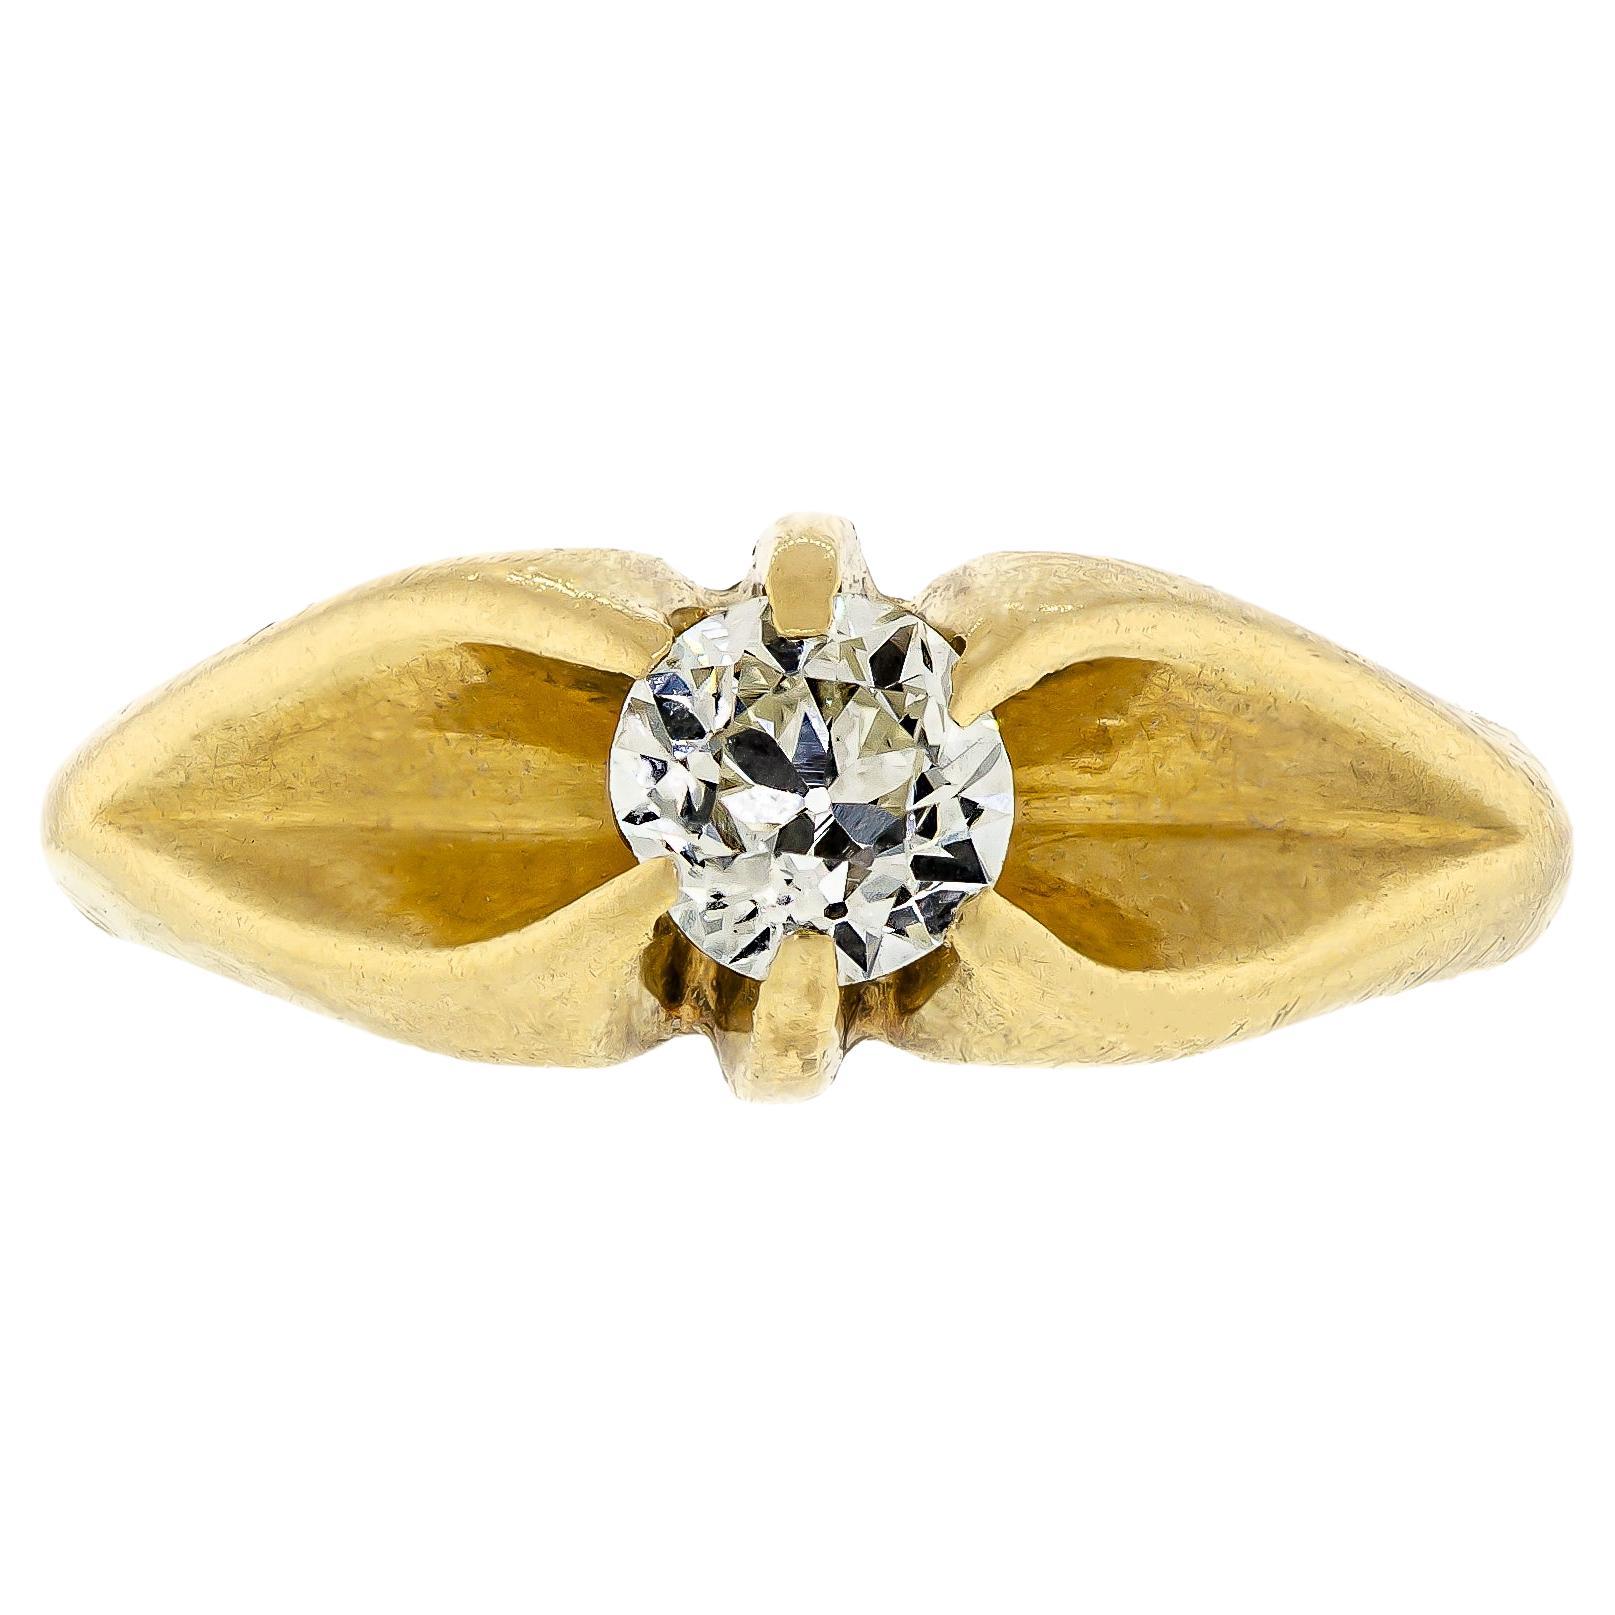 Attractive Victorian Circa 1895 14K Yellow Gold and Diamond Ring